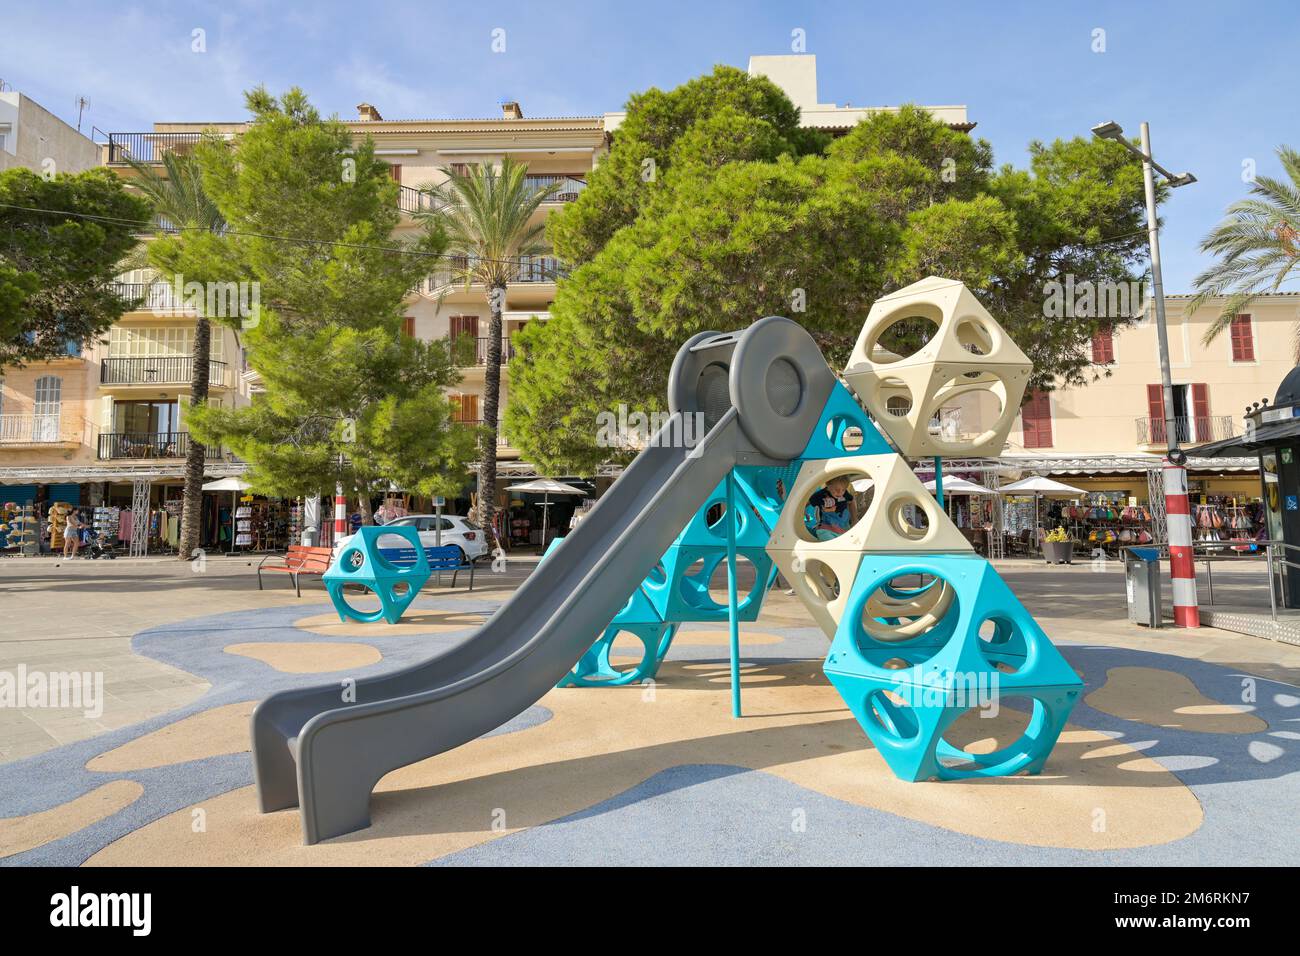 Rutsche, Spielplatz, Porto Cristo, Mallorca, Spanien Stock Photo